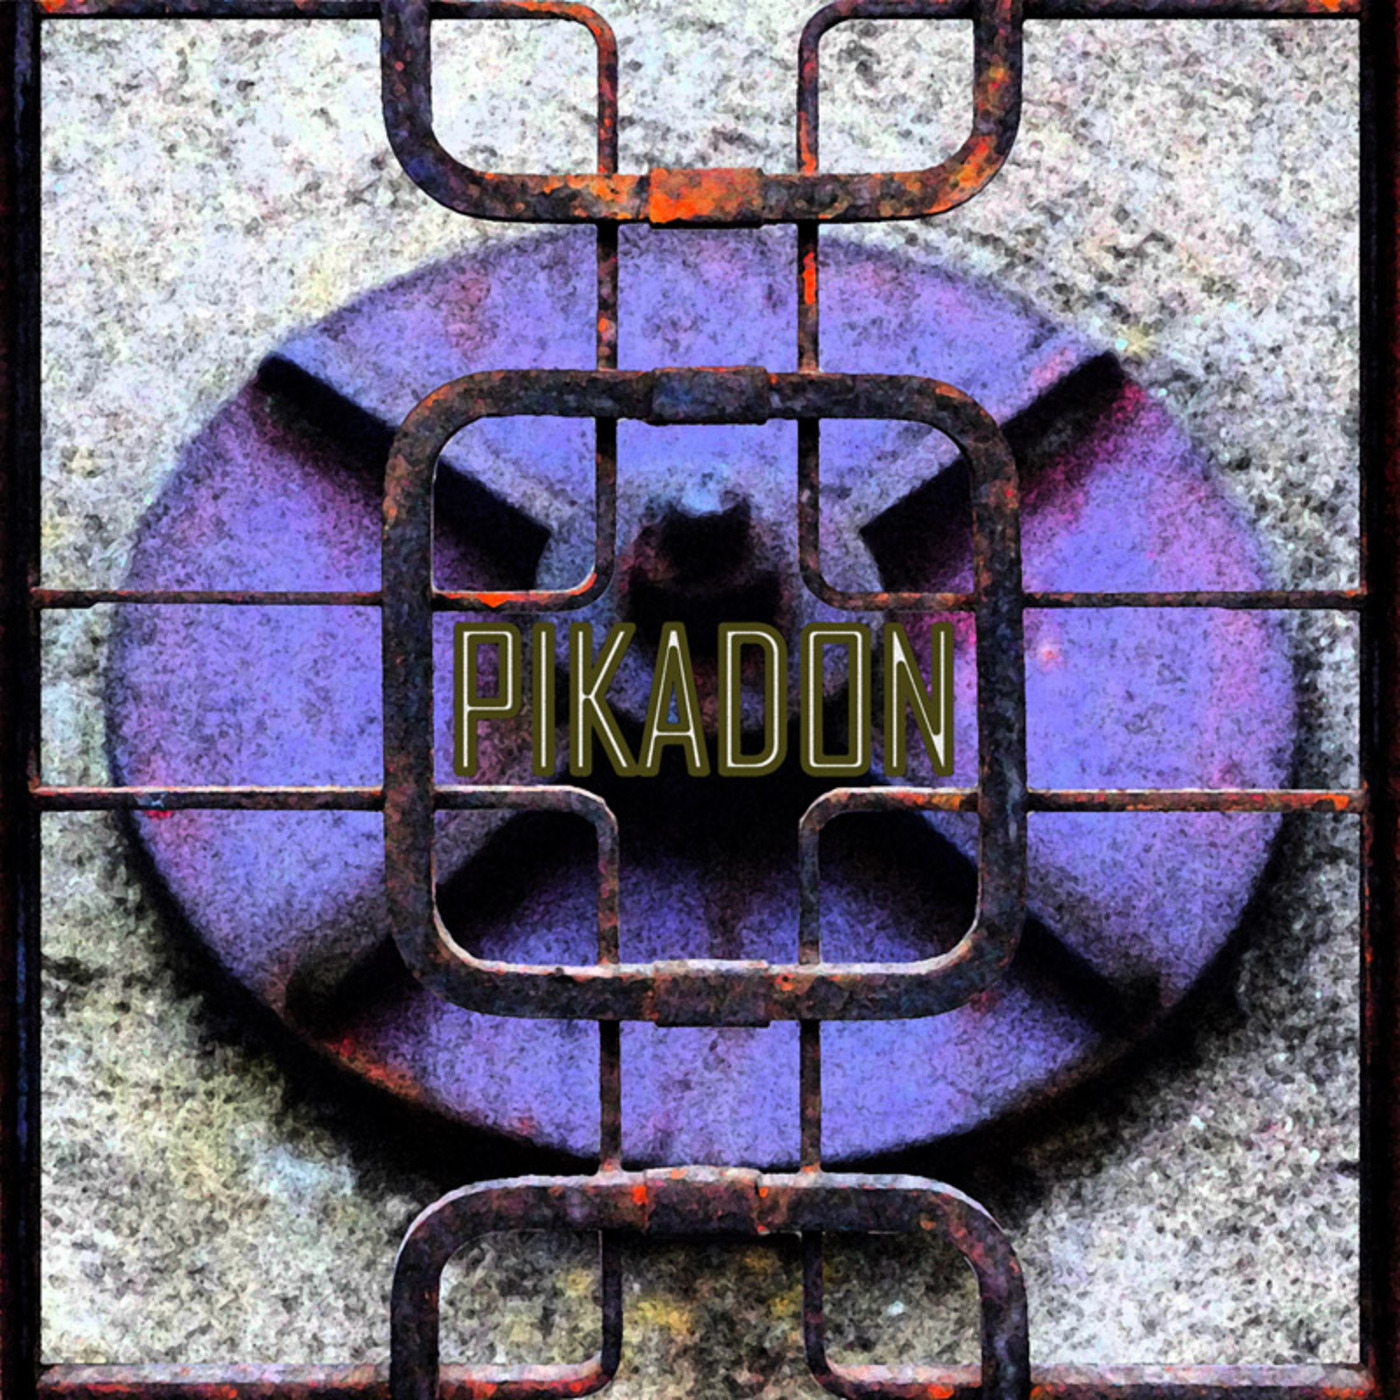 25 - Pikadon - Berseged rampage industrial collage (Suzana's Bauten Remix)